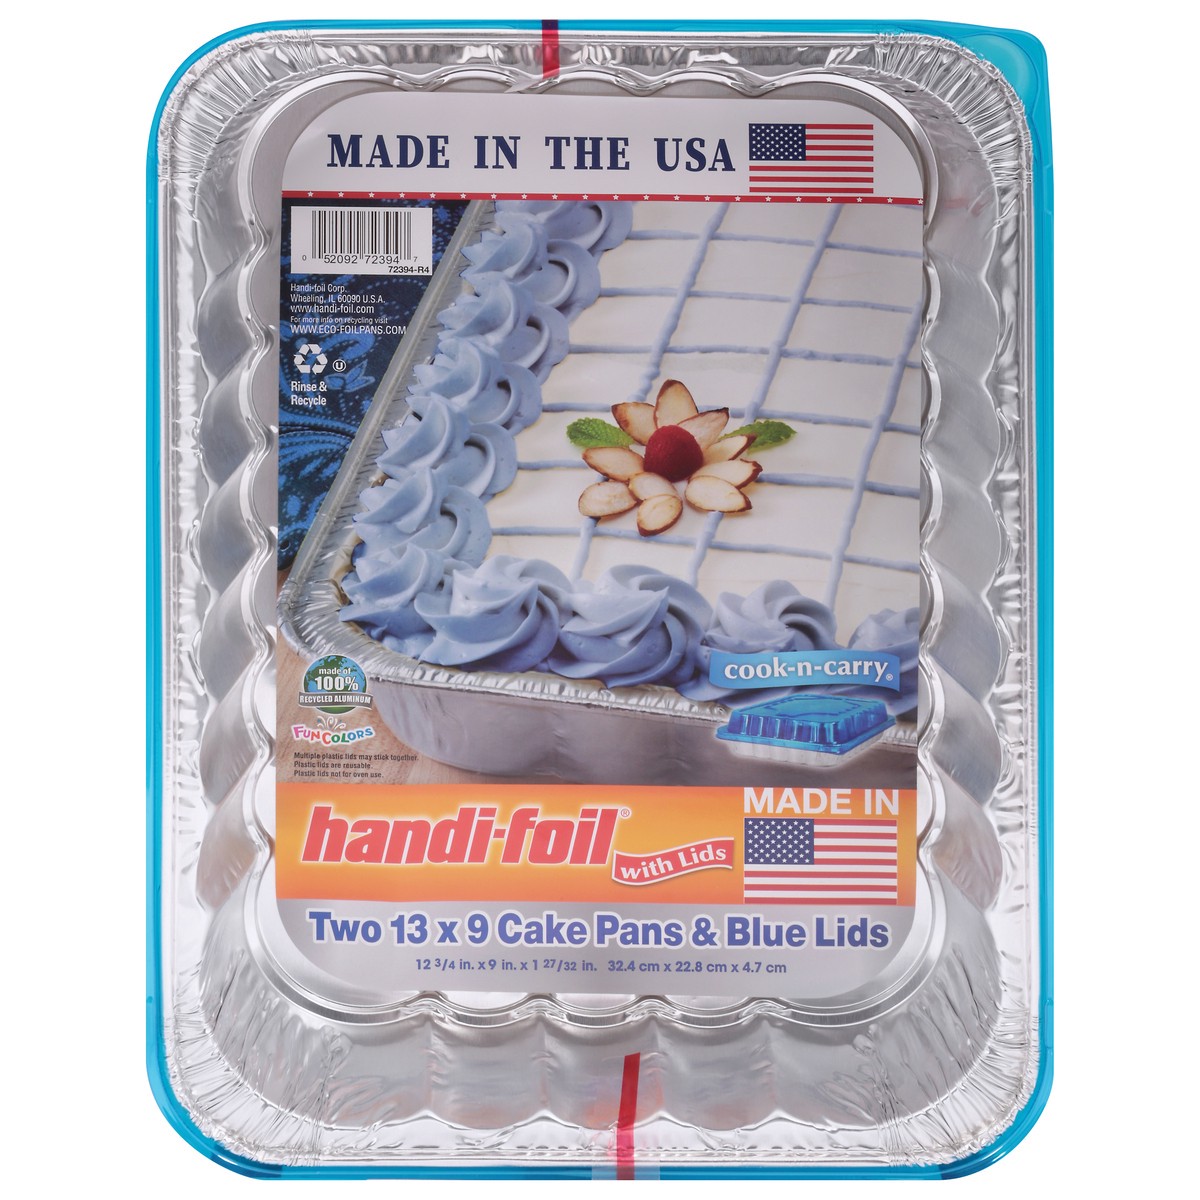 slide 1 of 10, Handi-foil 13 x 9 Cake Pans & Blue Lids 2 ea, 2 ct